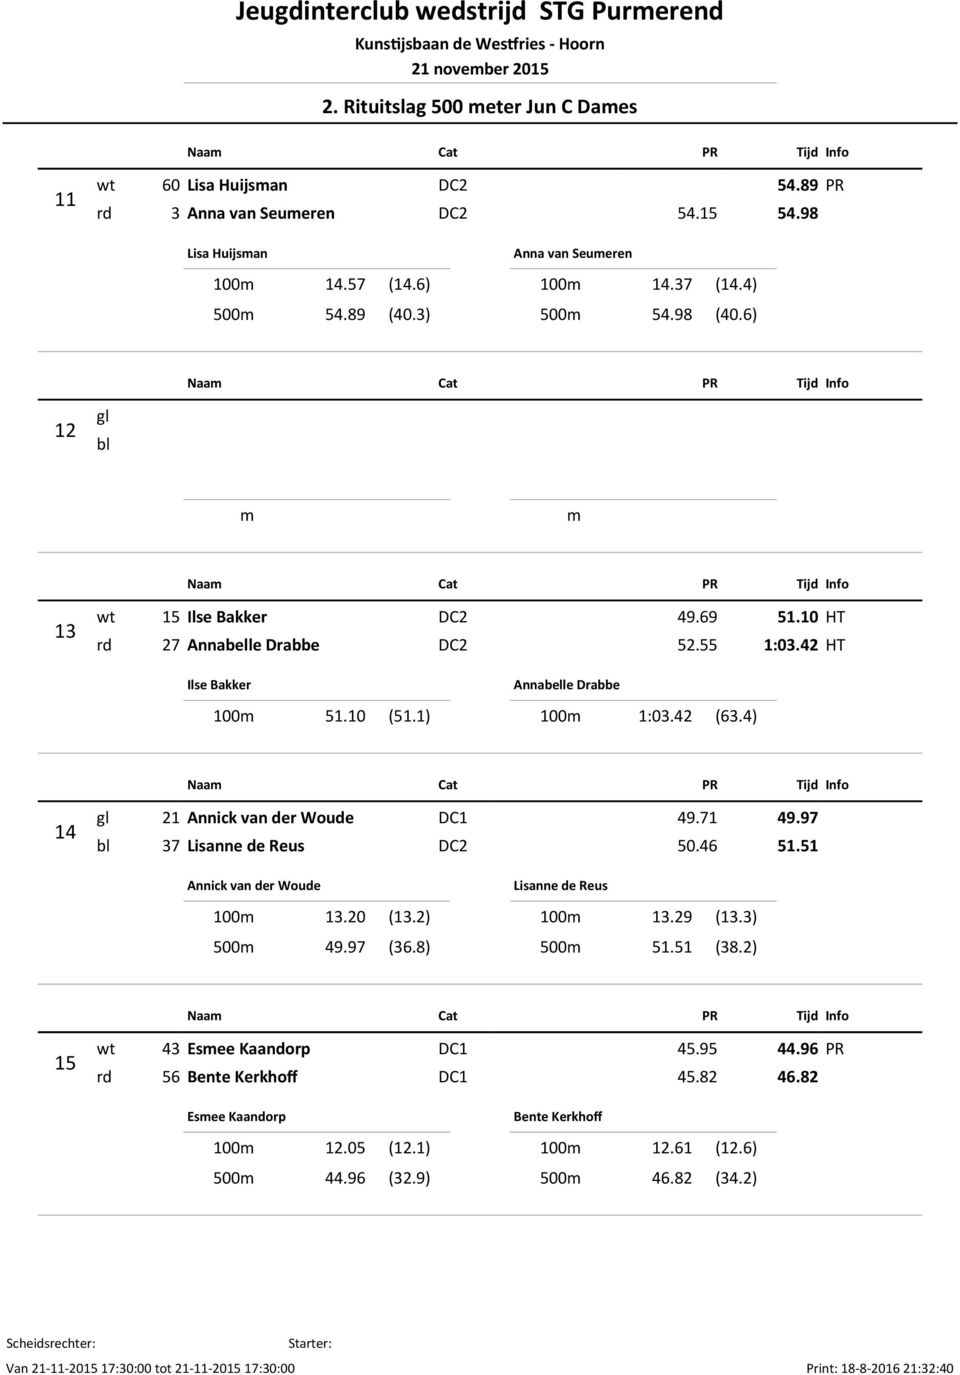 4) 14 gl 21 Annick van der Woude DC1 49.71 49.97 bl 37 Lisanne de Reus DC2 50.46 51.51 Annick van der Woude 100m 13.20 (13.2) 500m 49.97 (36.8) Lisanne de Reus 100m 13.29 (13.3) 500m 51.51 (38.